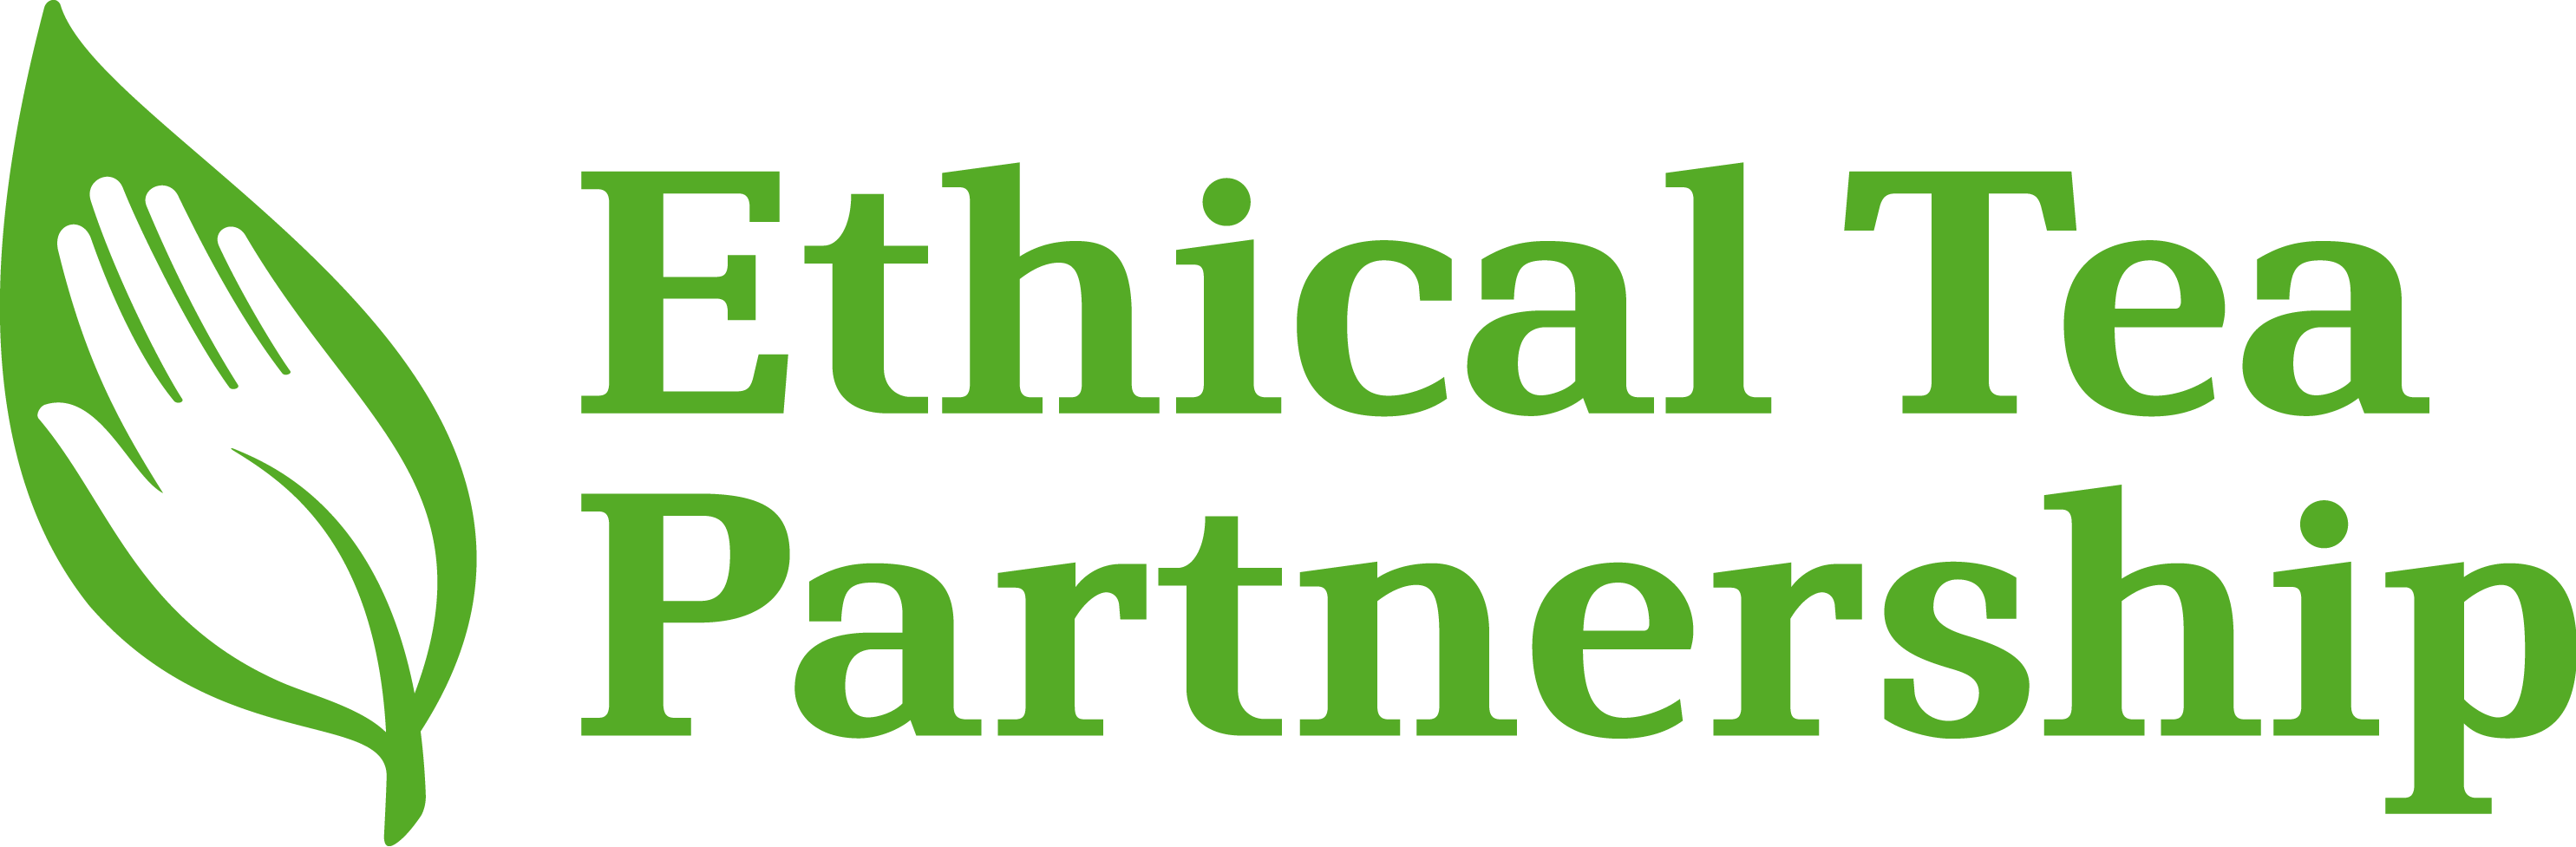 Ethical Tea Partnership 